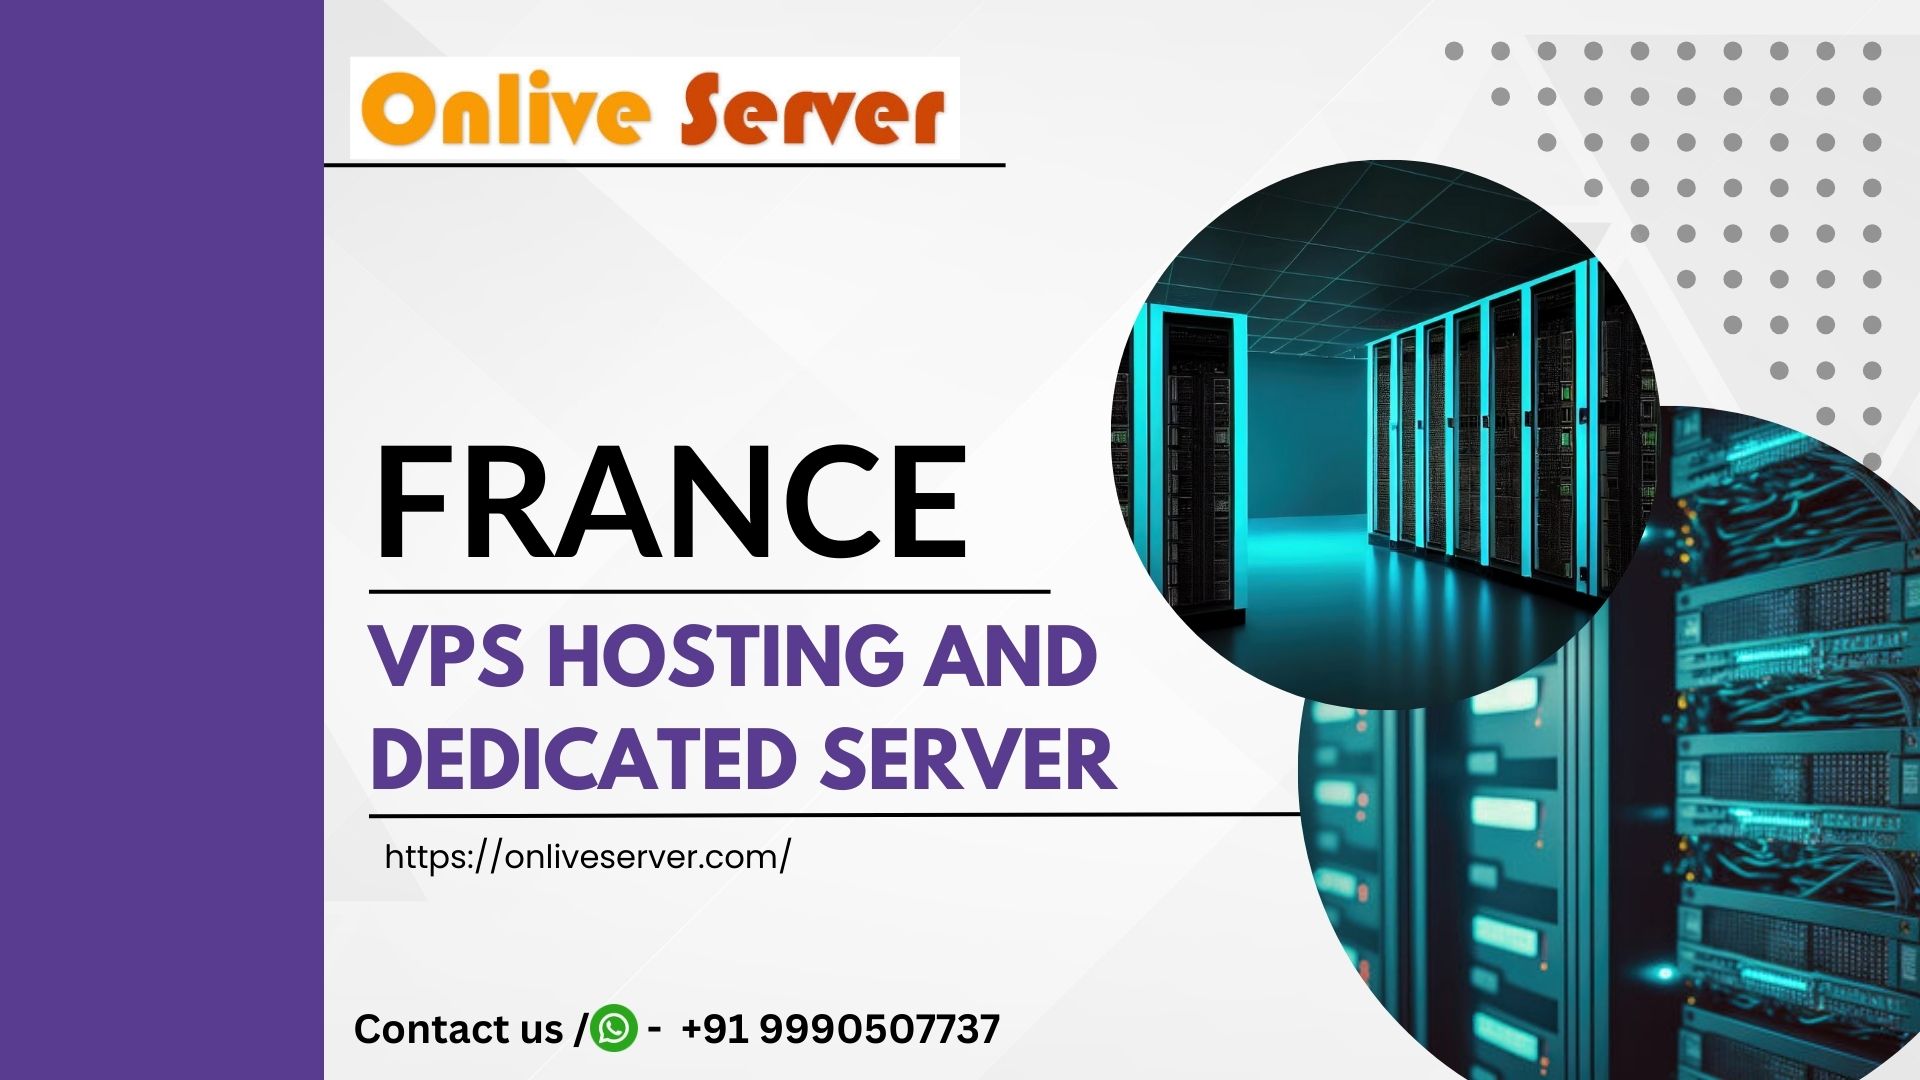 France VPS Hosting and Dedicated Server